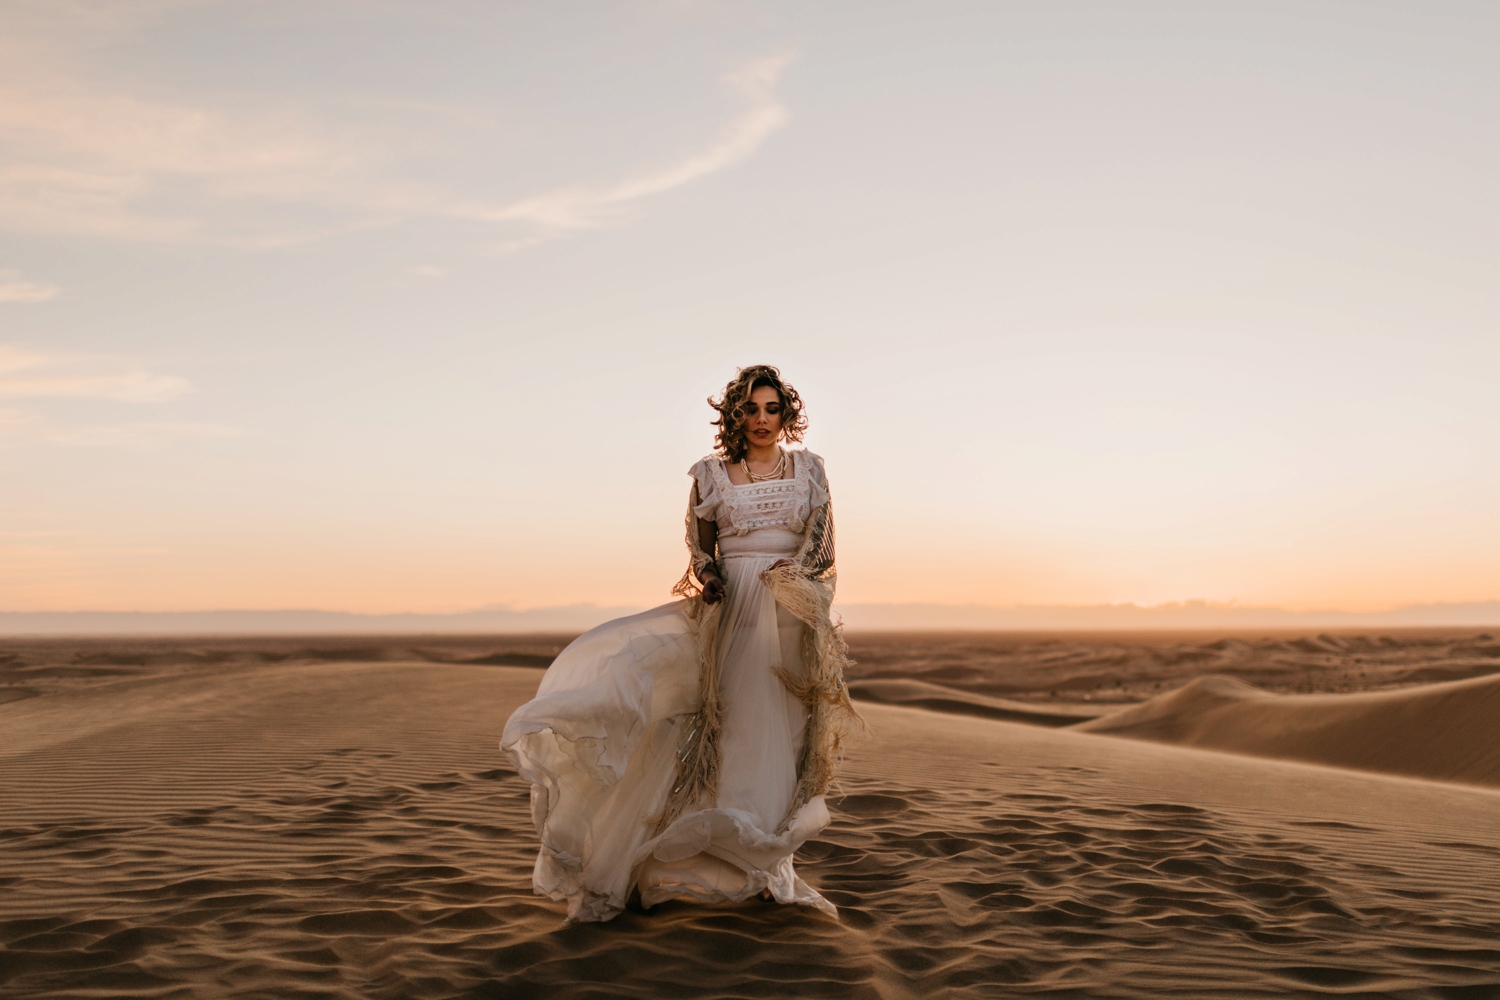 desert style bride in sand dunes 